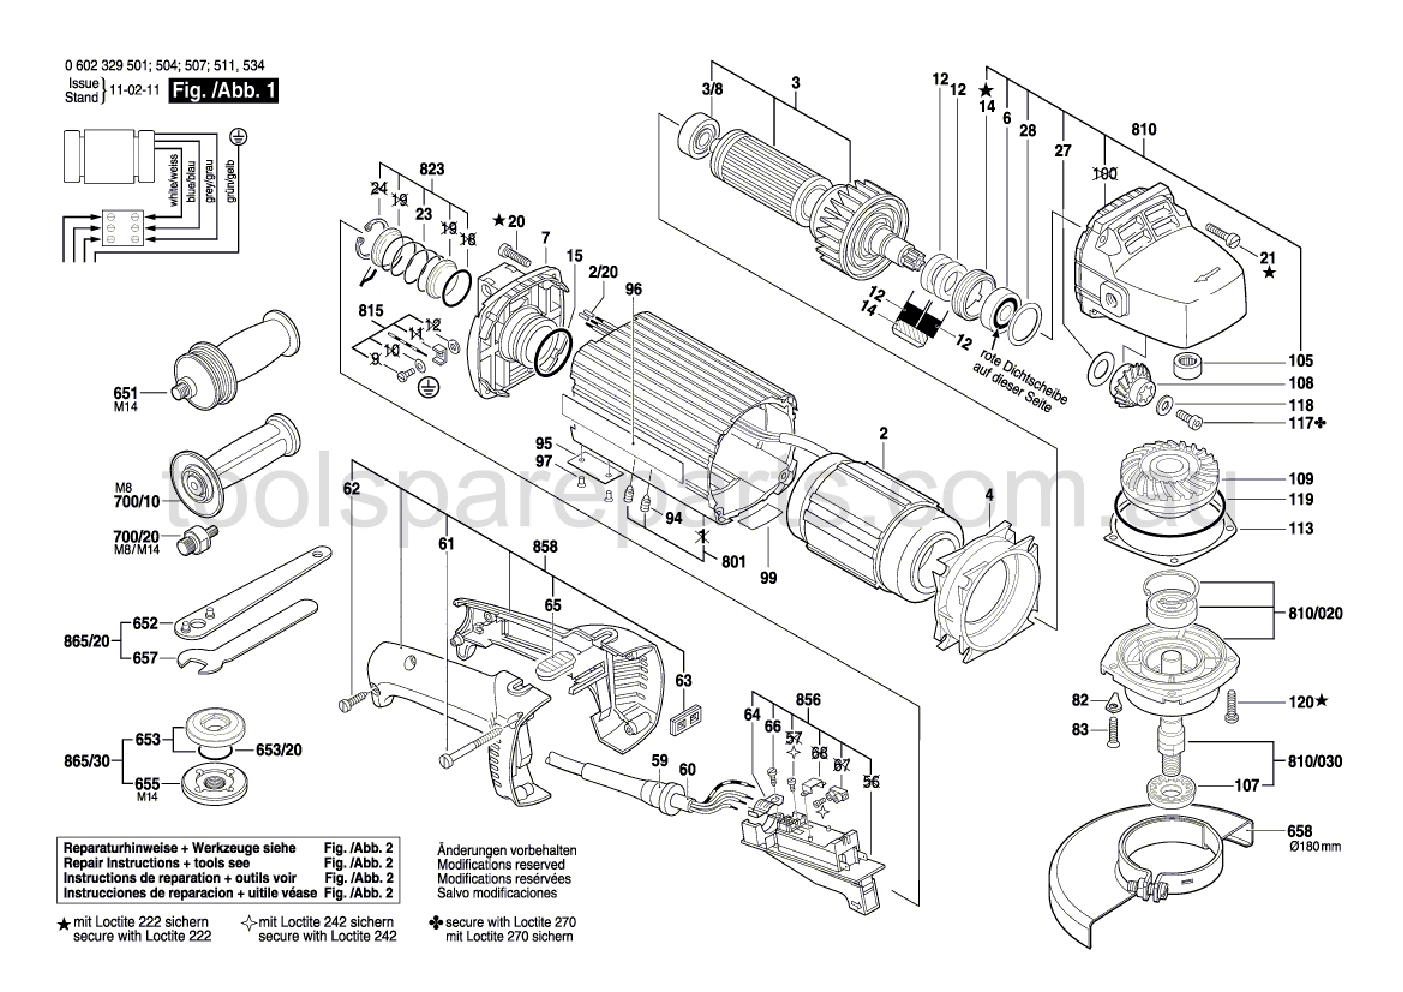 Bosch HWS 85/180 0602329504  Diagram 1